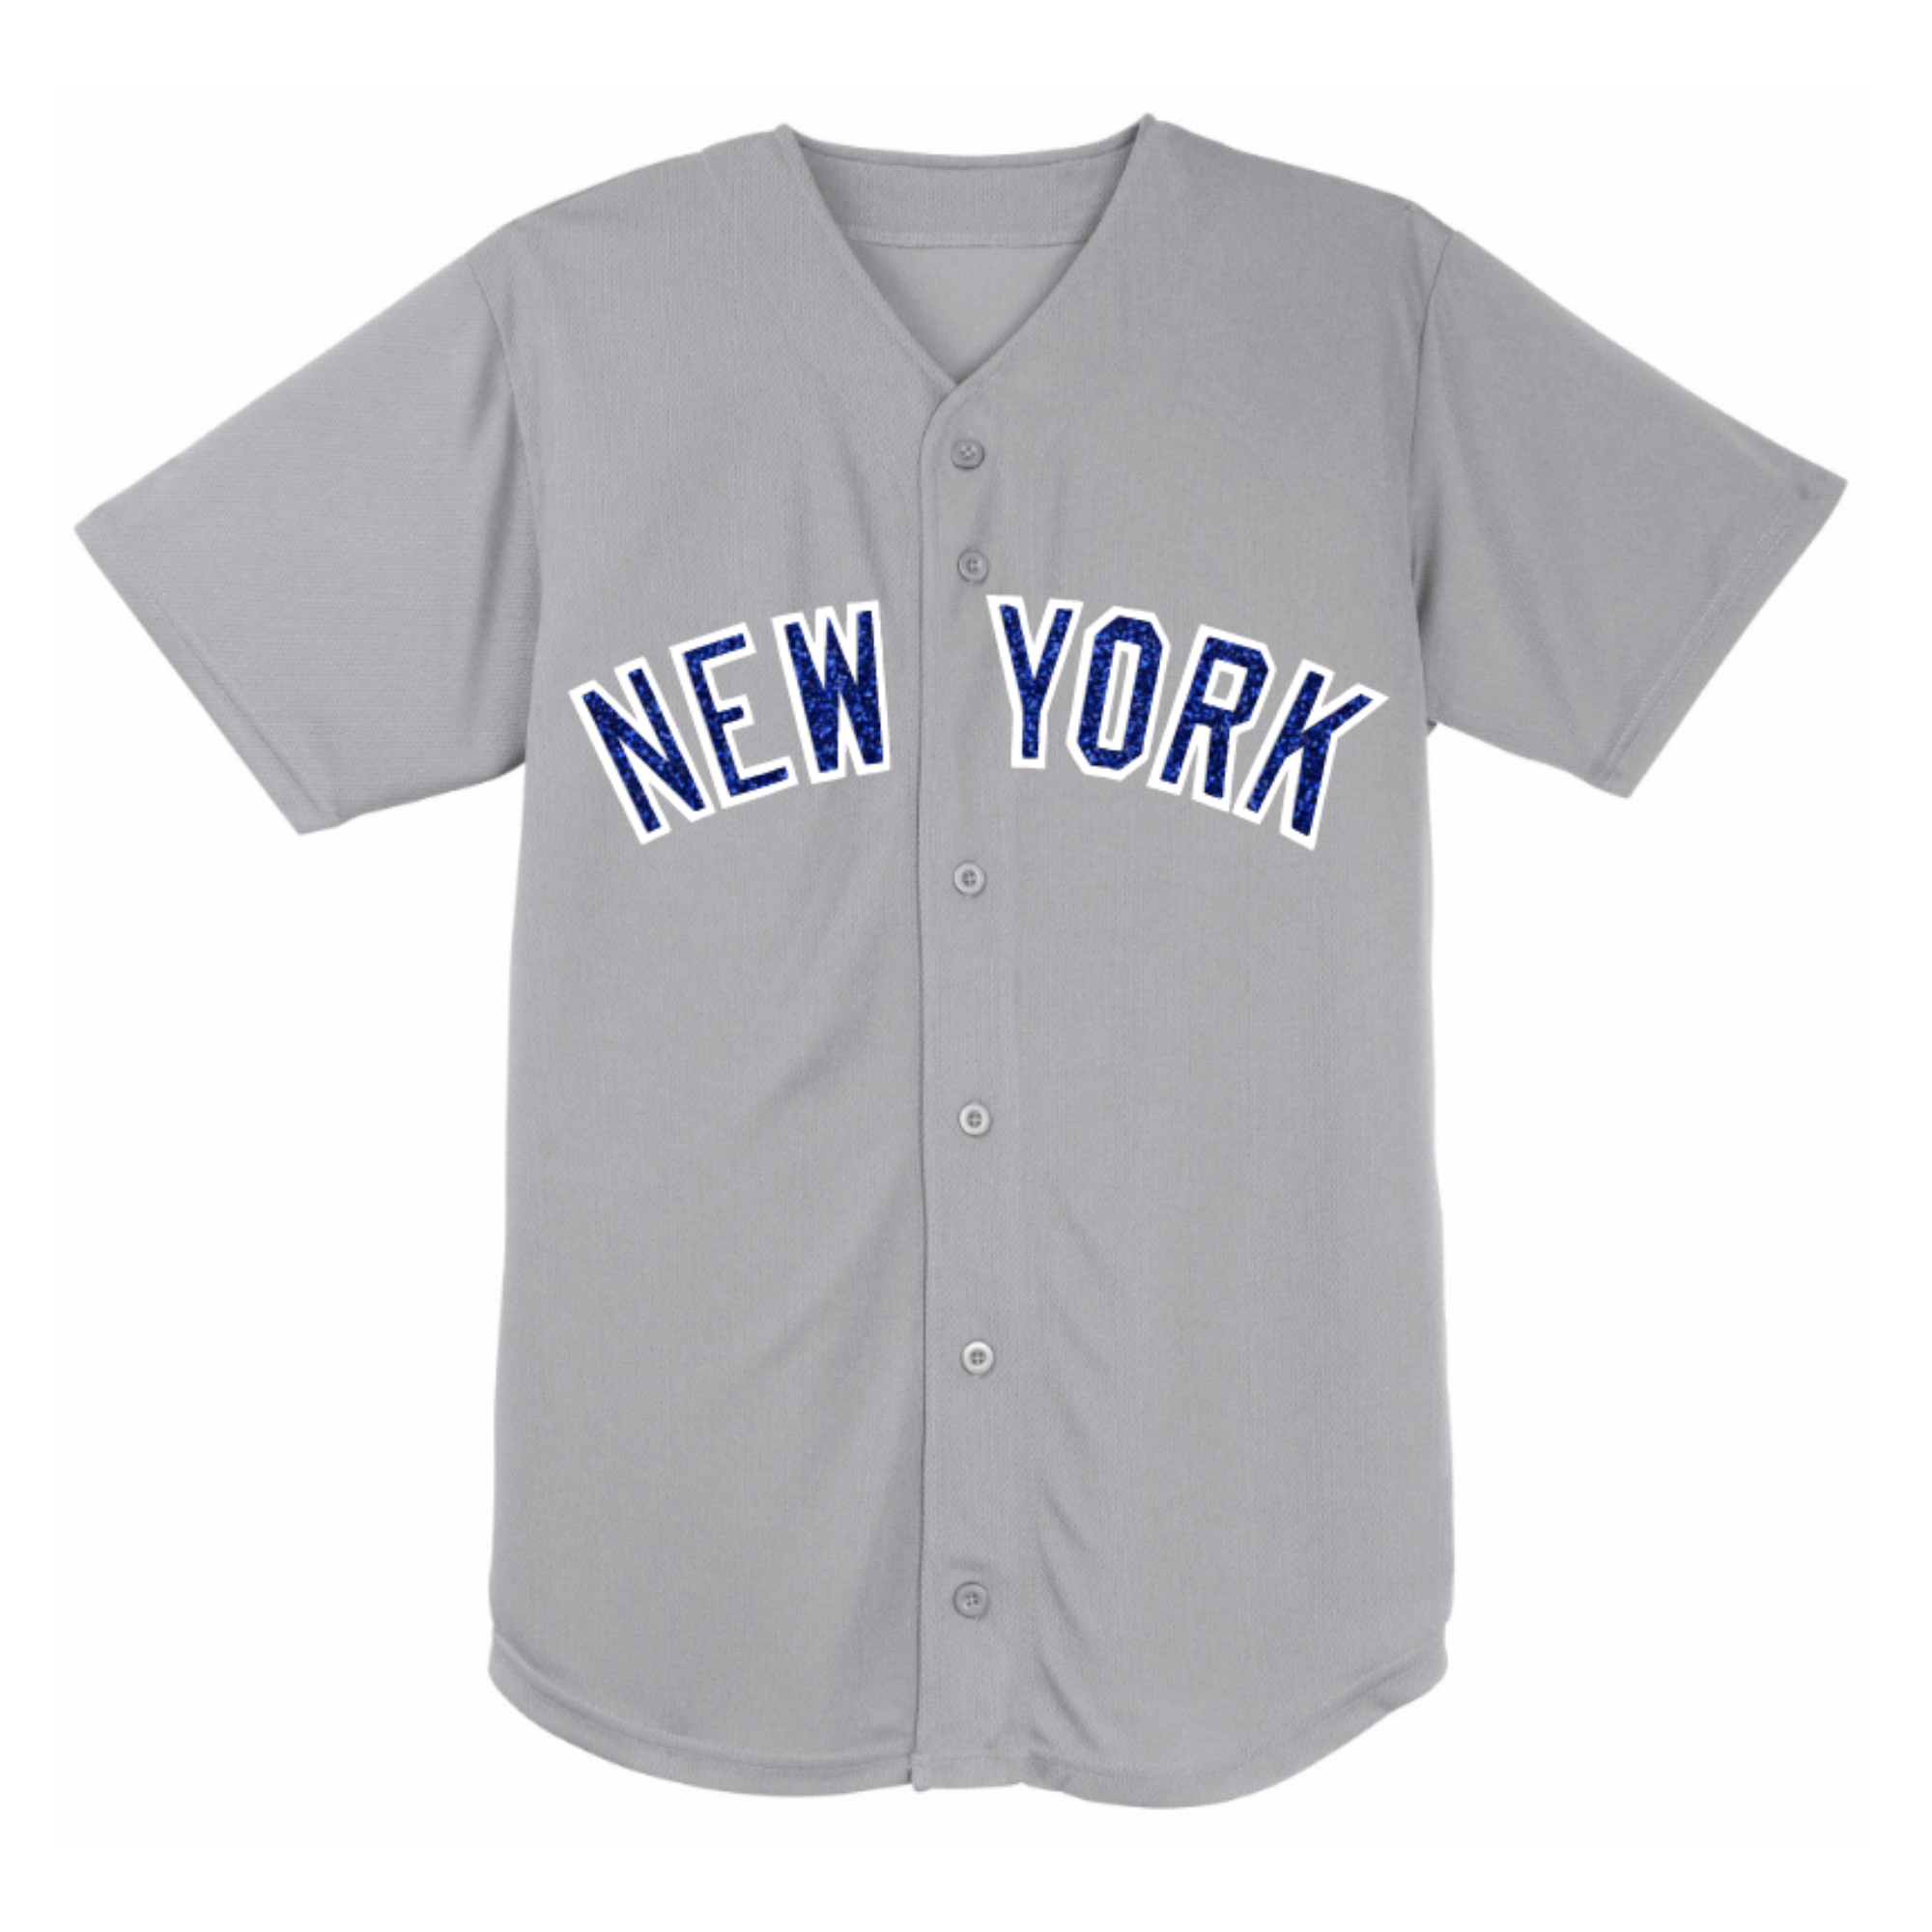 New York Yankees Womens Apparel & Gear